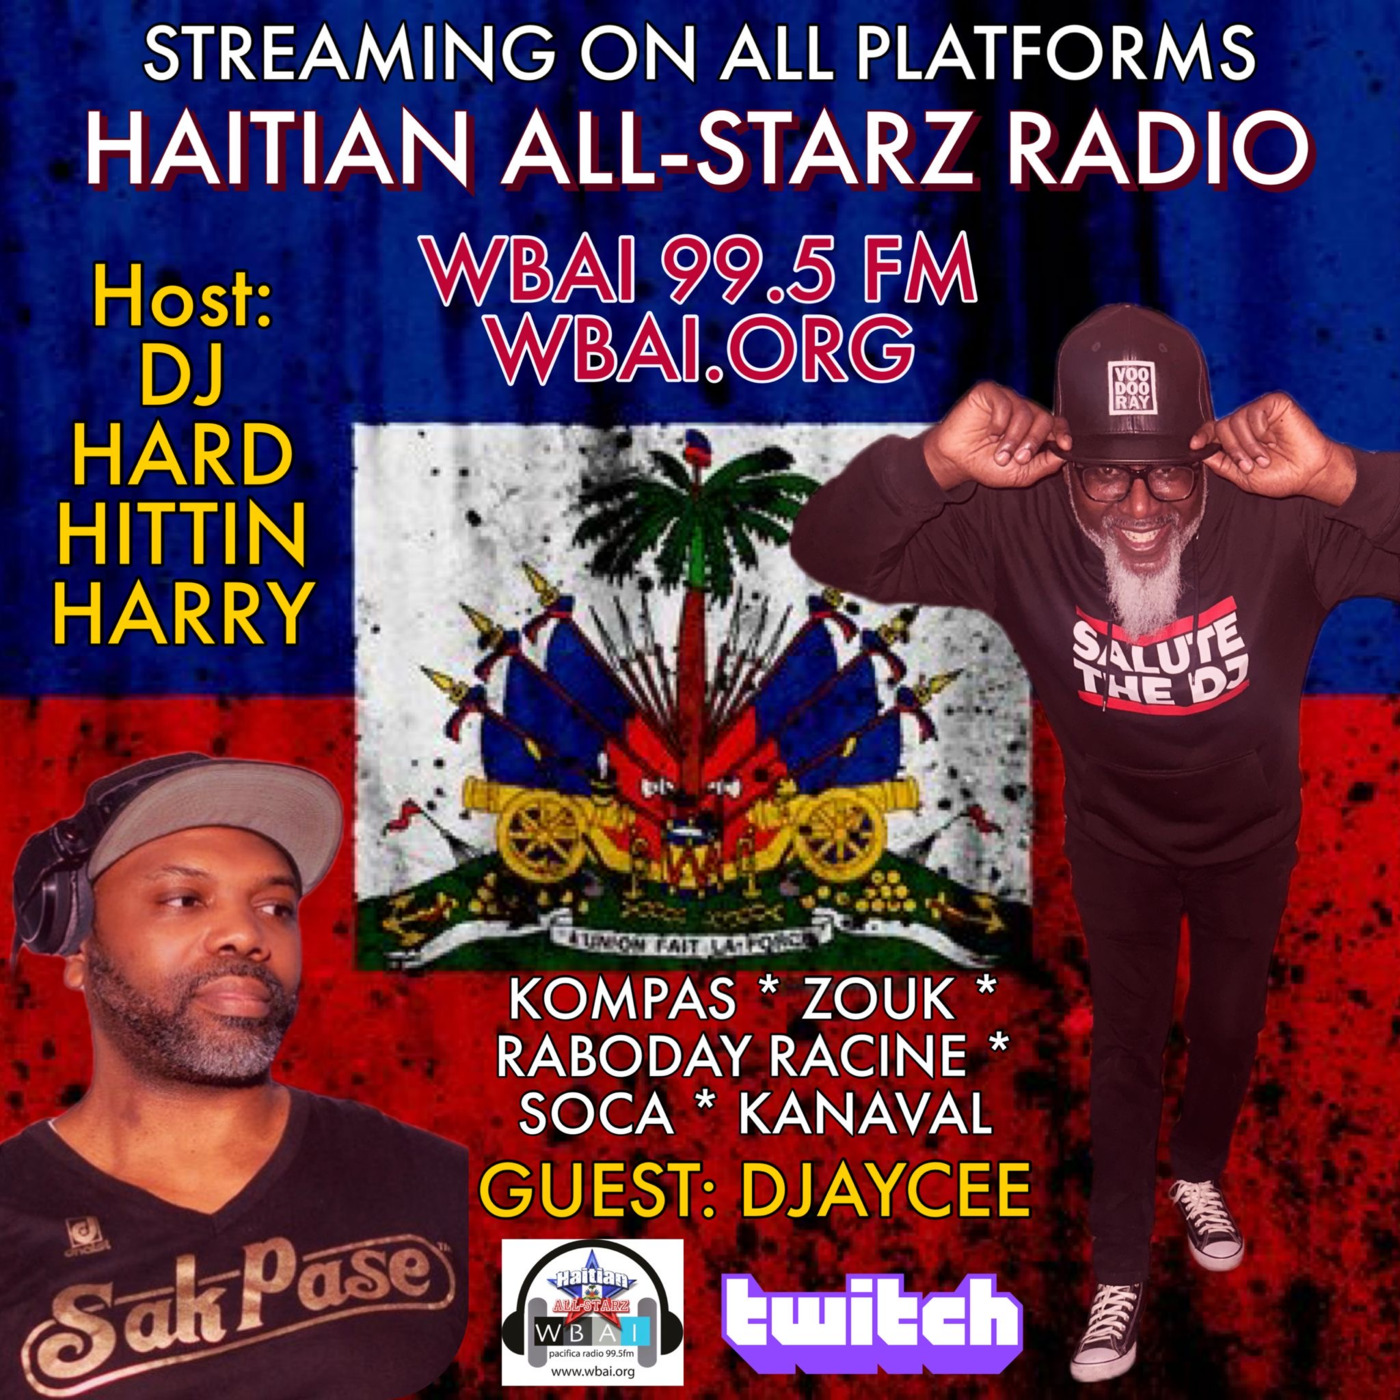 Episode 6: HAITIAN ALL-STARZ RADIO - WBAI 99.5 FM - EPISODE #228 - HARD HITTIN HARRY & DJayCee